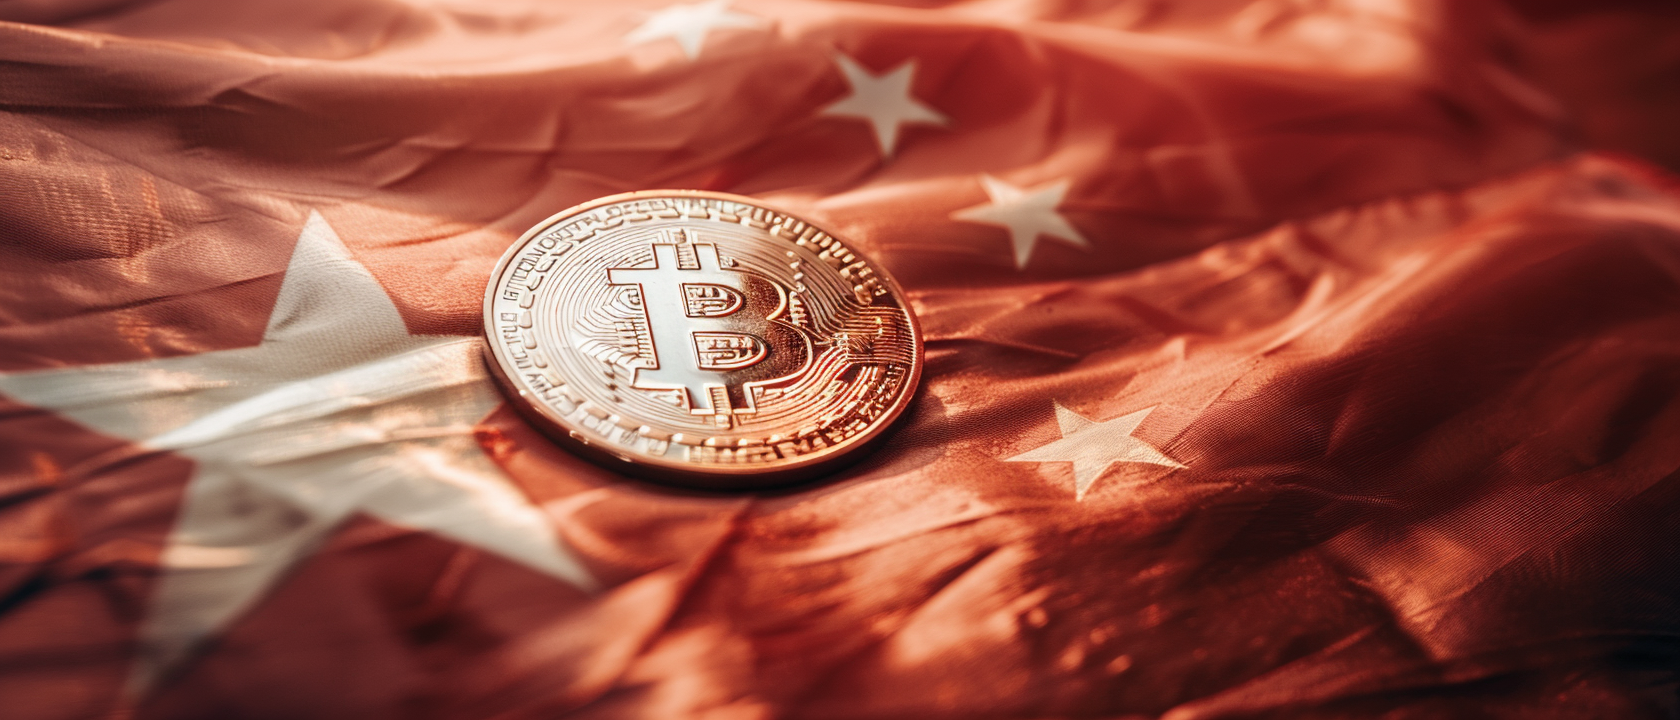 Chinese Fraud Victims Seek Return of Seized £3 Billion Bitcoin in UK